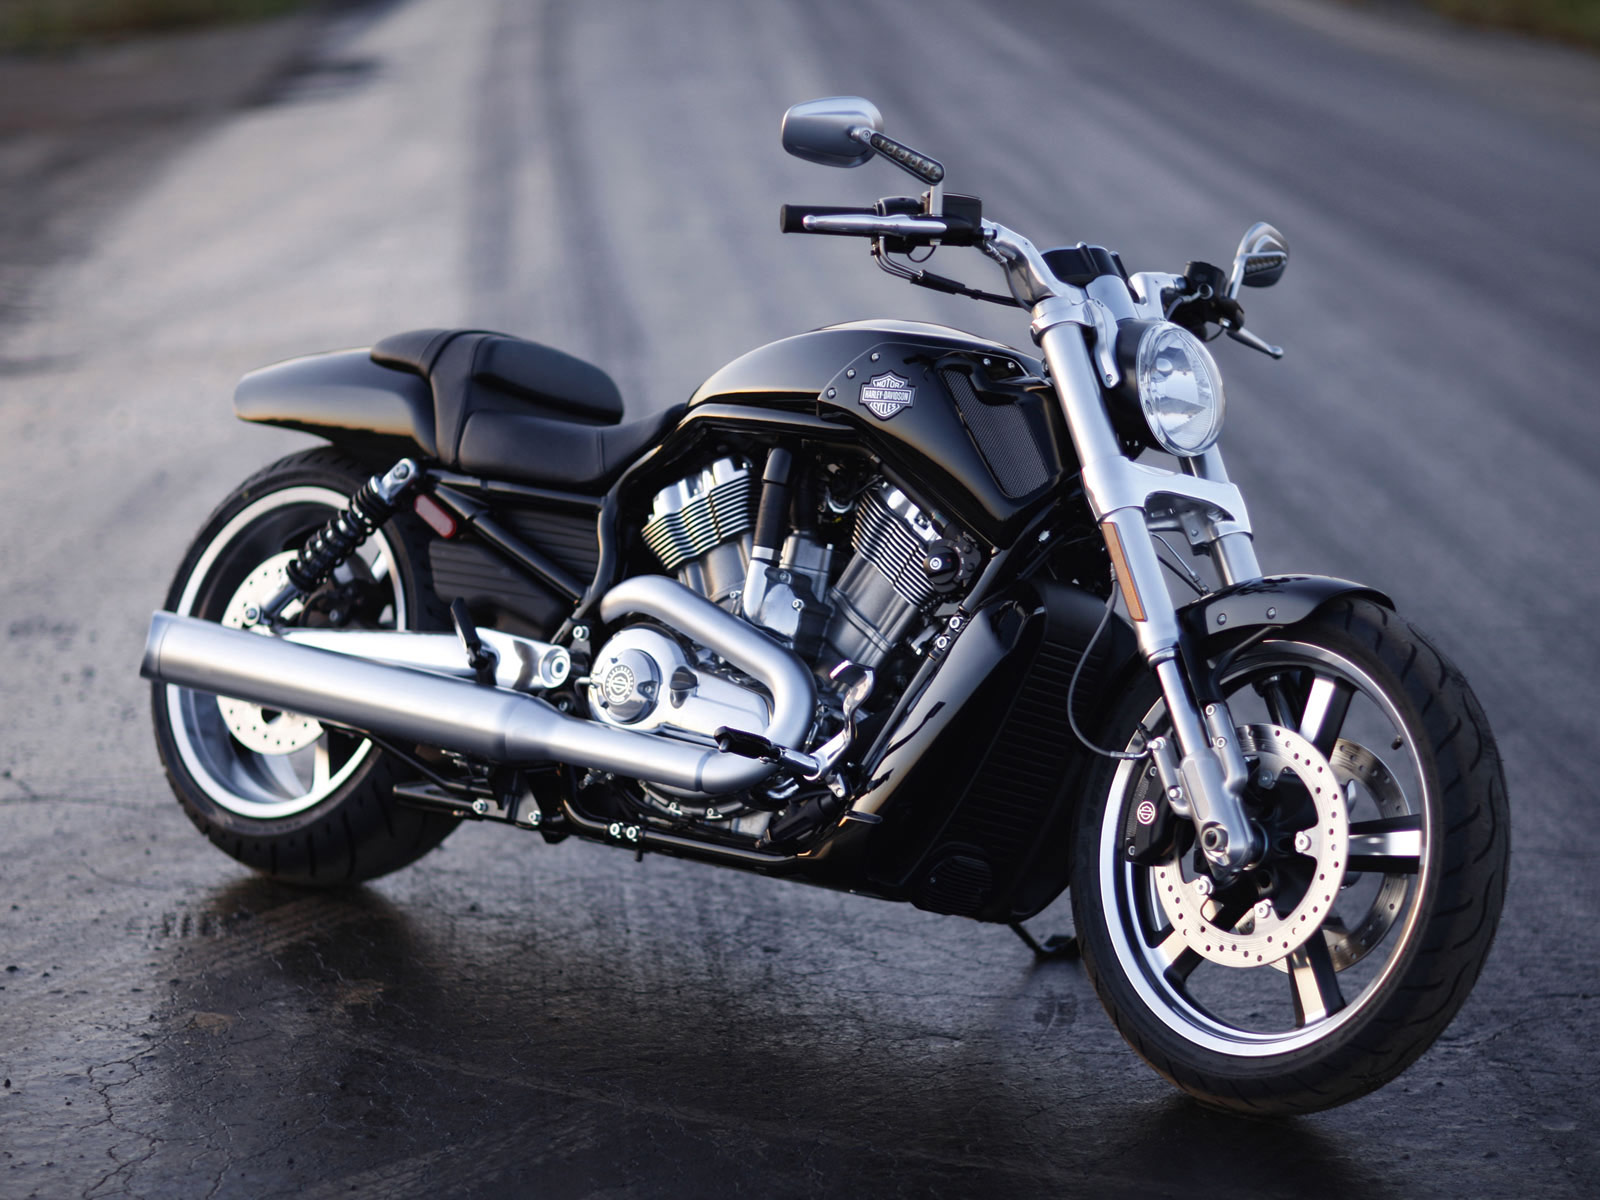 Harley-Davidson VRSCF V-Rod Muscle 1250cc photo - 3